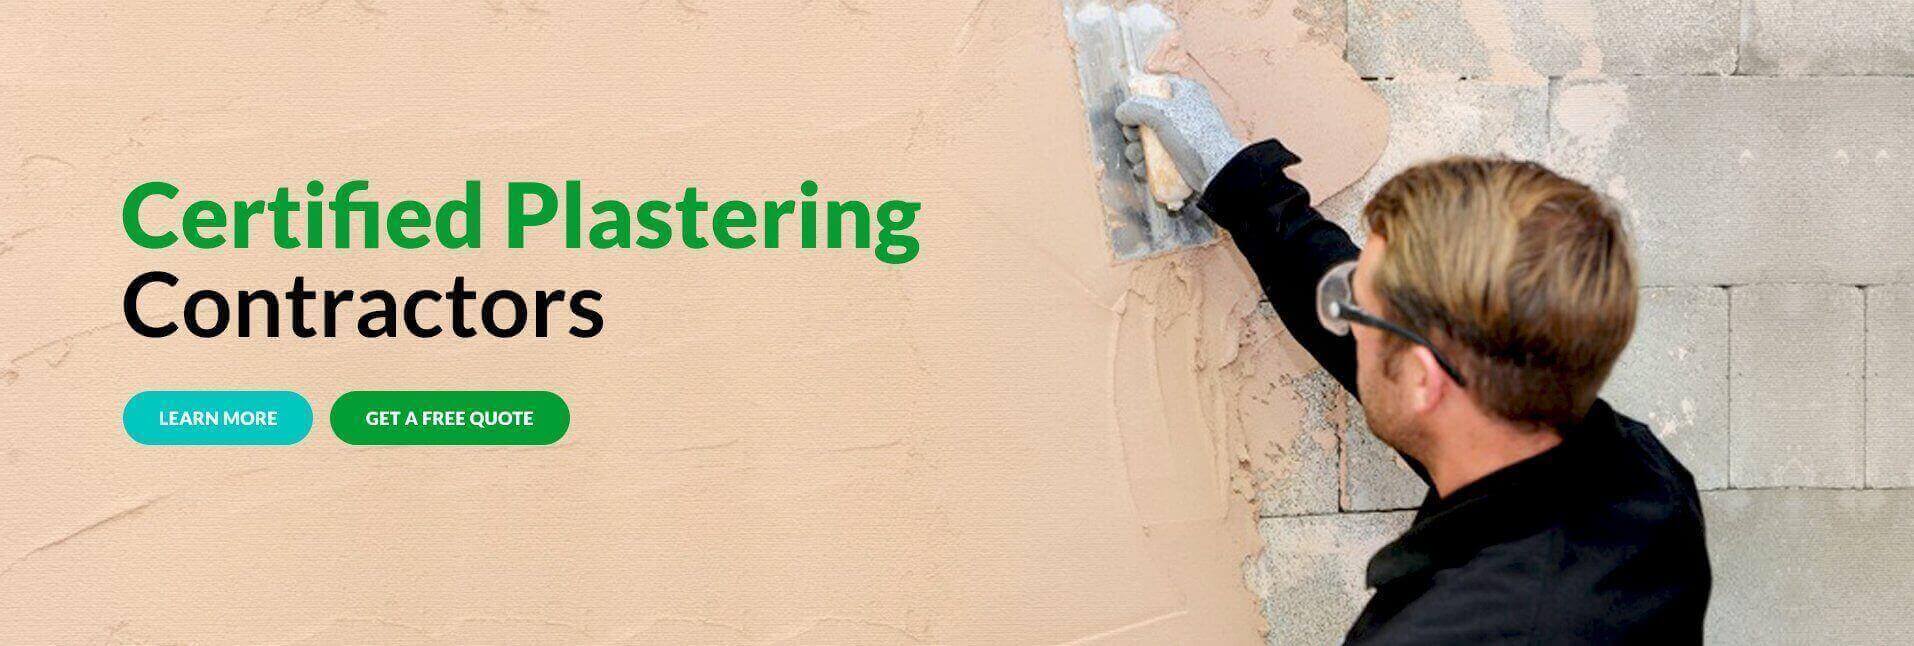 Plastering Contractors London - D. White Plastering